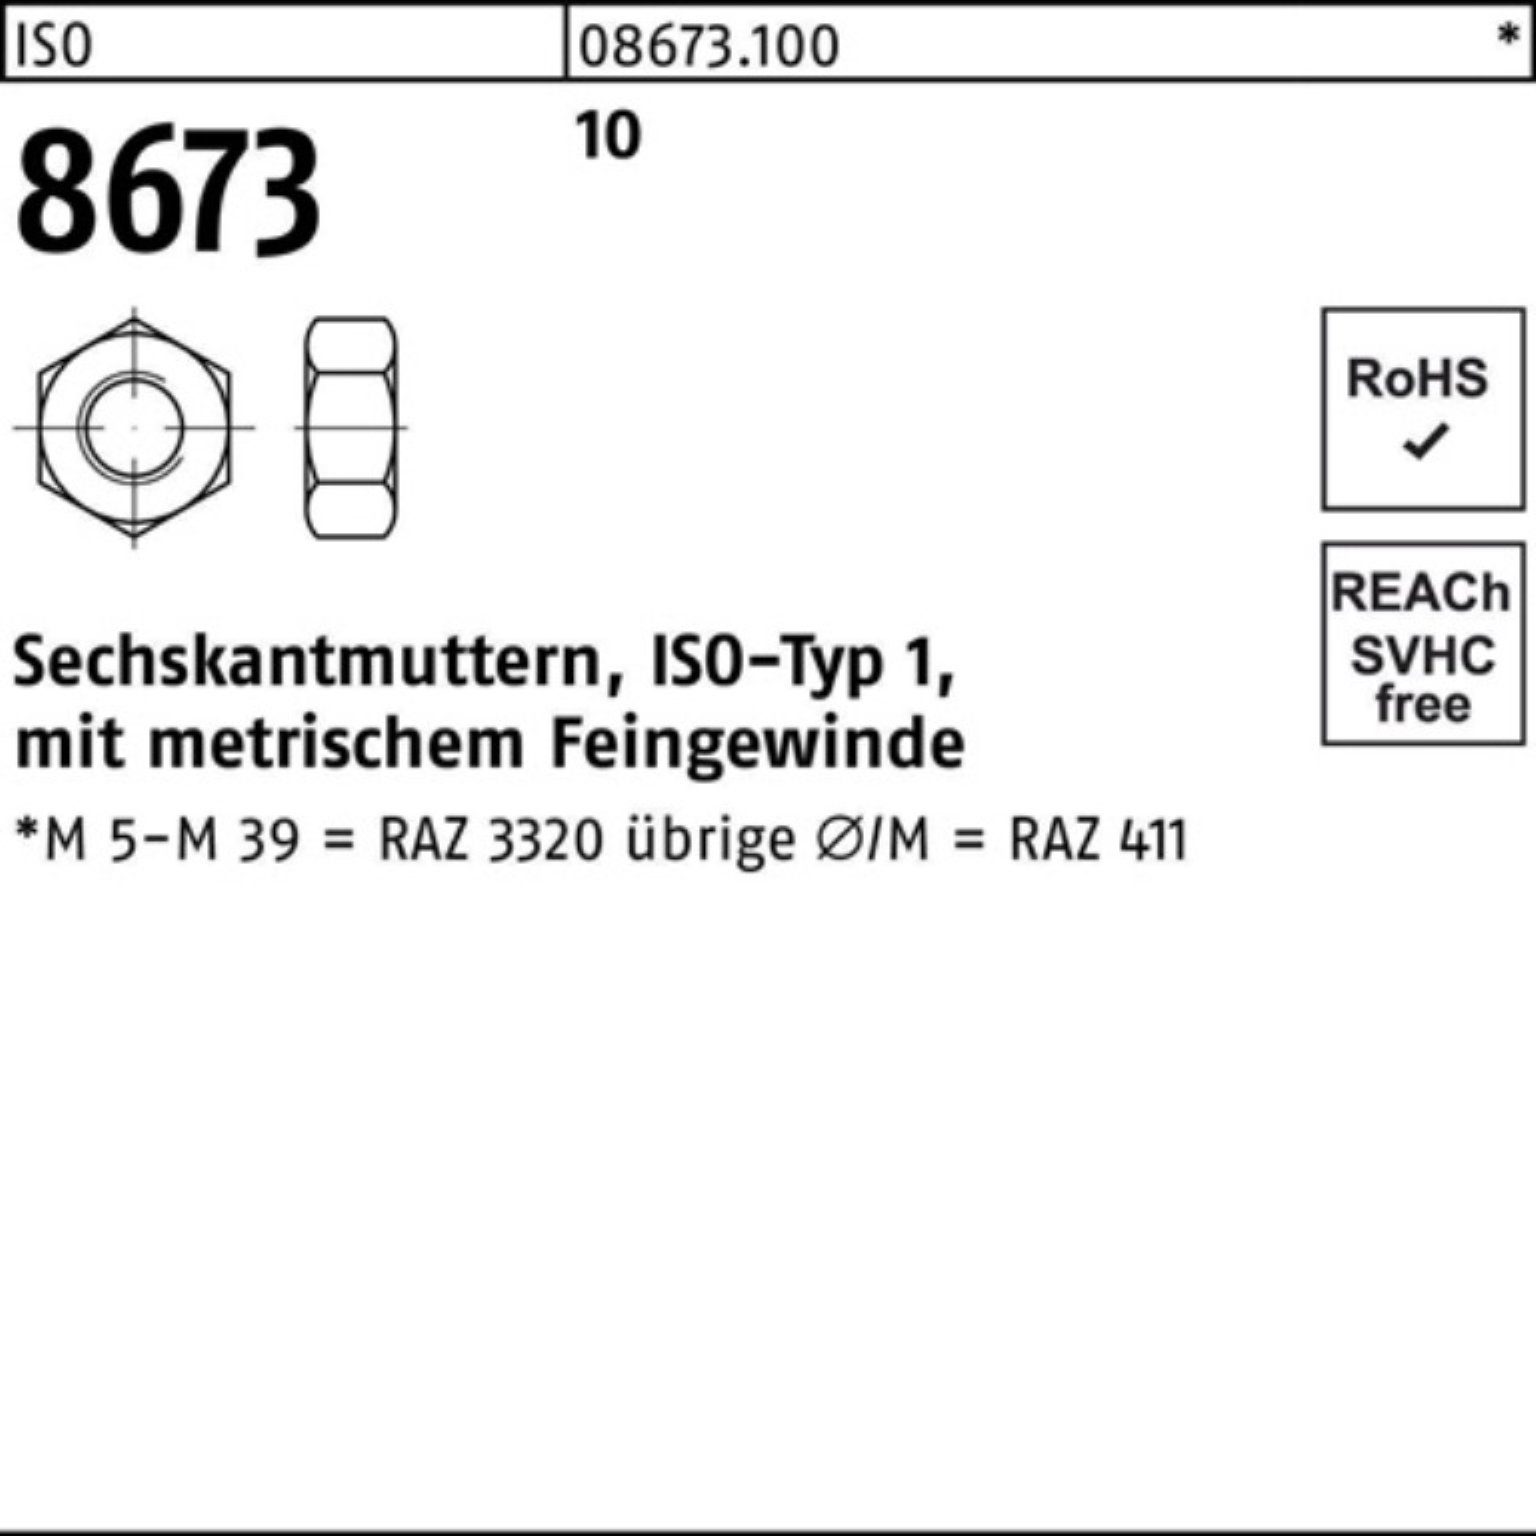 Reyher Muttern 100er Pack Sechskantmutter Stück M22x 8673 10 10 25 1,5 ISO ISO 8673